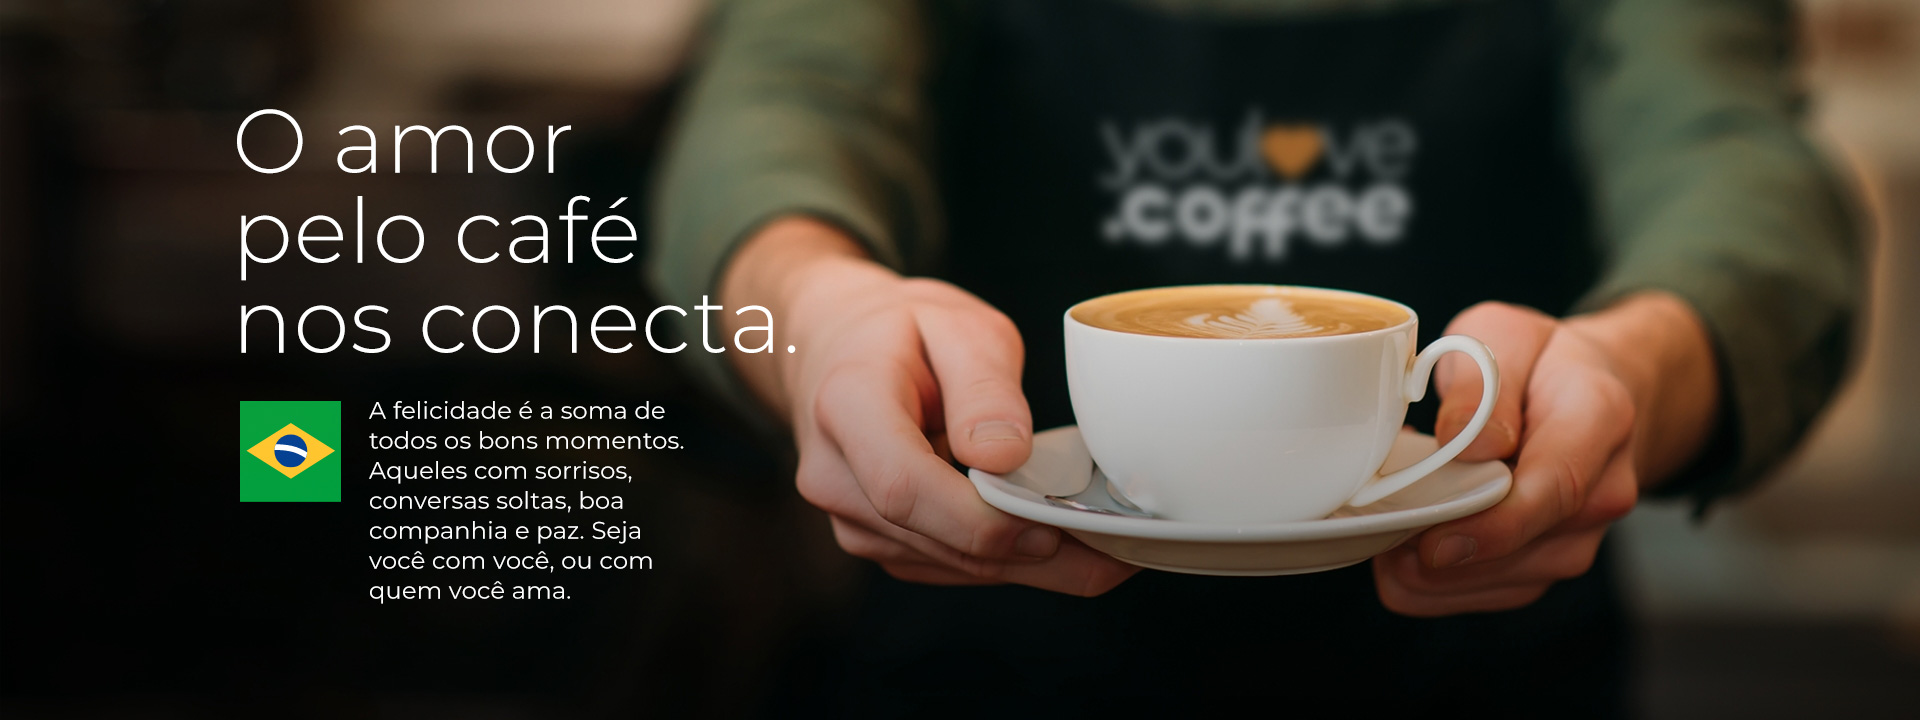 youlove.coffee Brasil - O amor pelo café nos conecta.